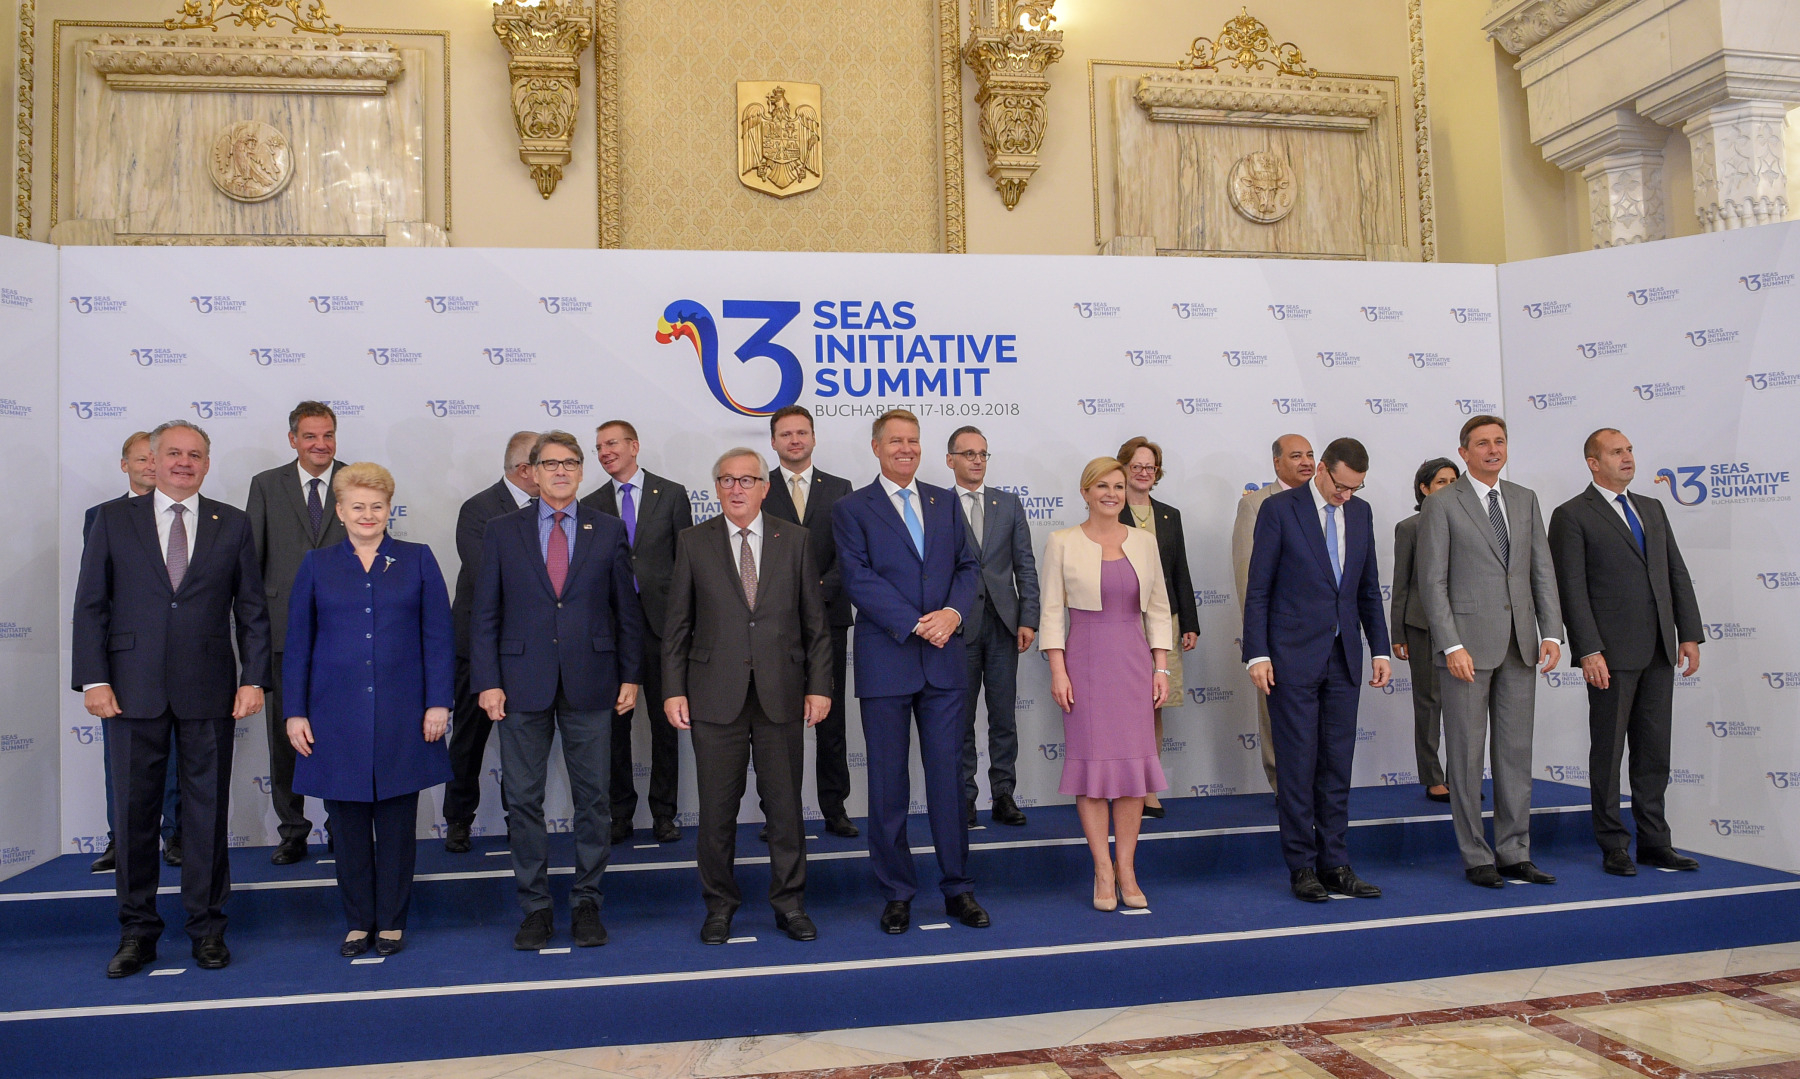 Three Seas Initiative Ukraine